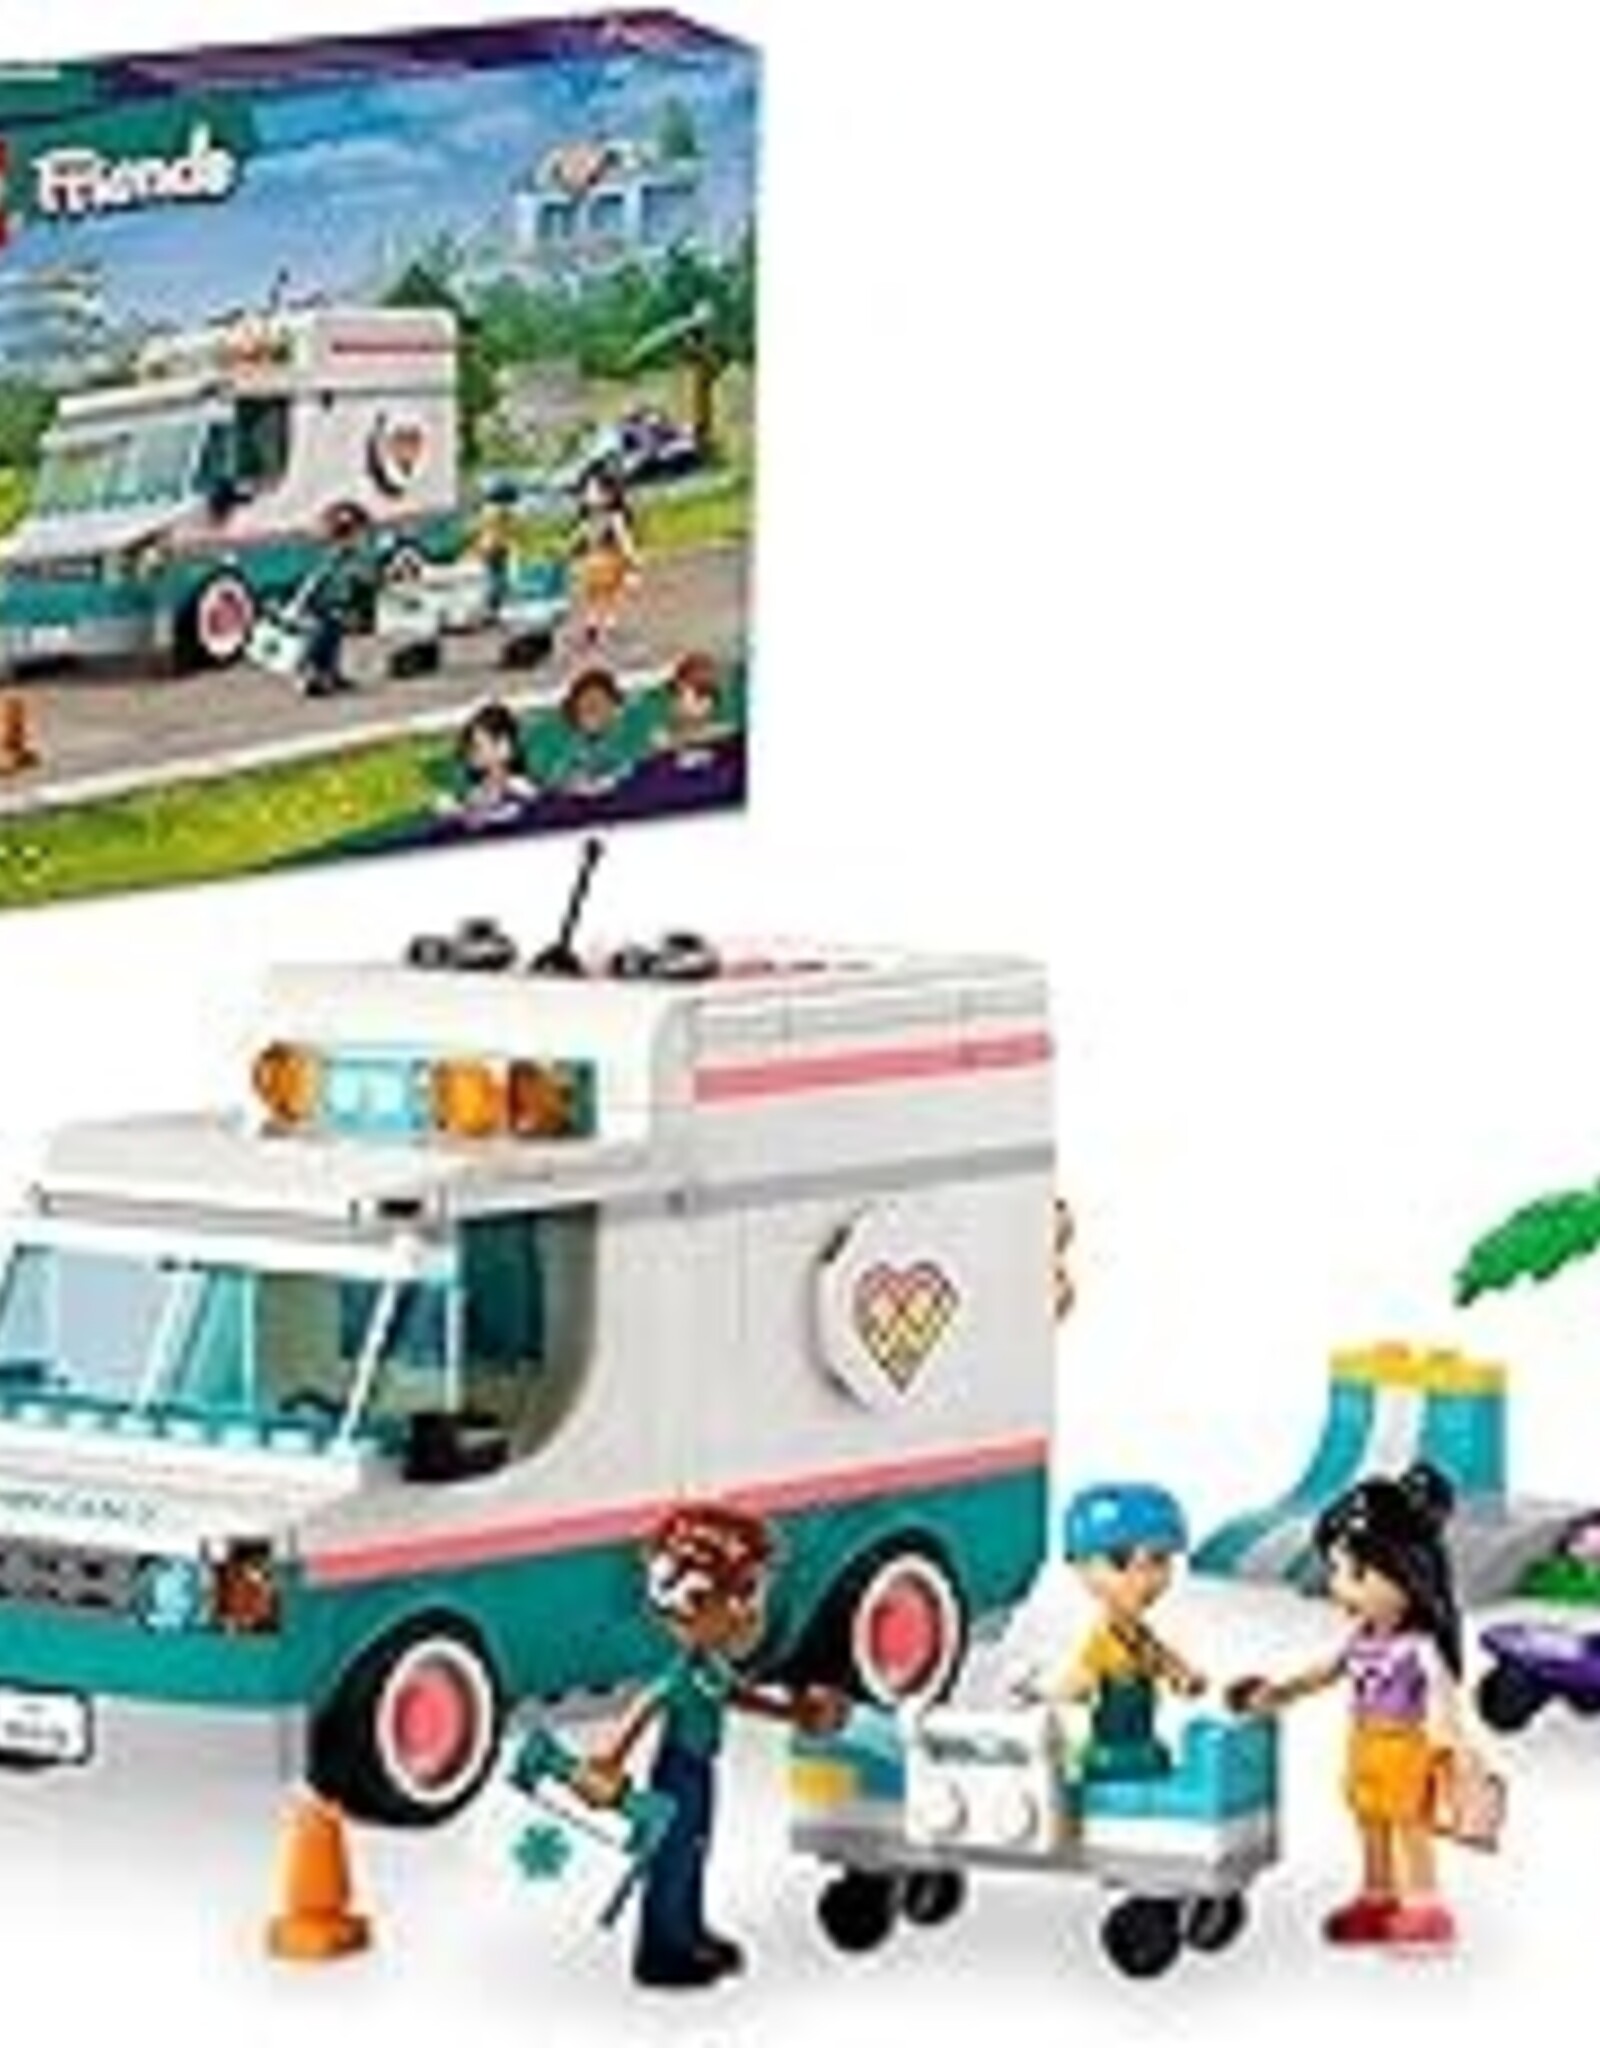 LEGO Friends Heartlake City Hospital Ambulance